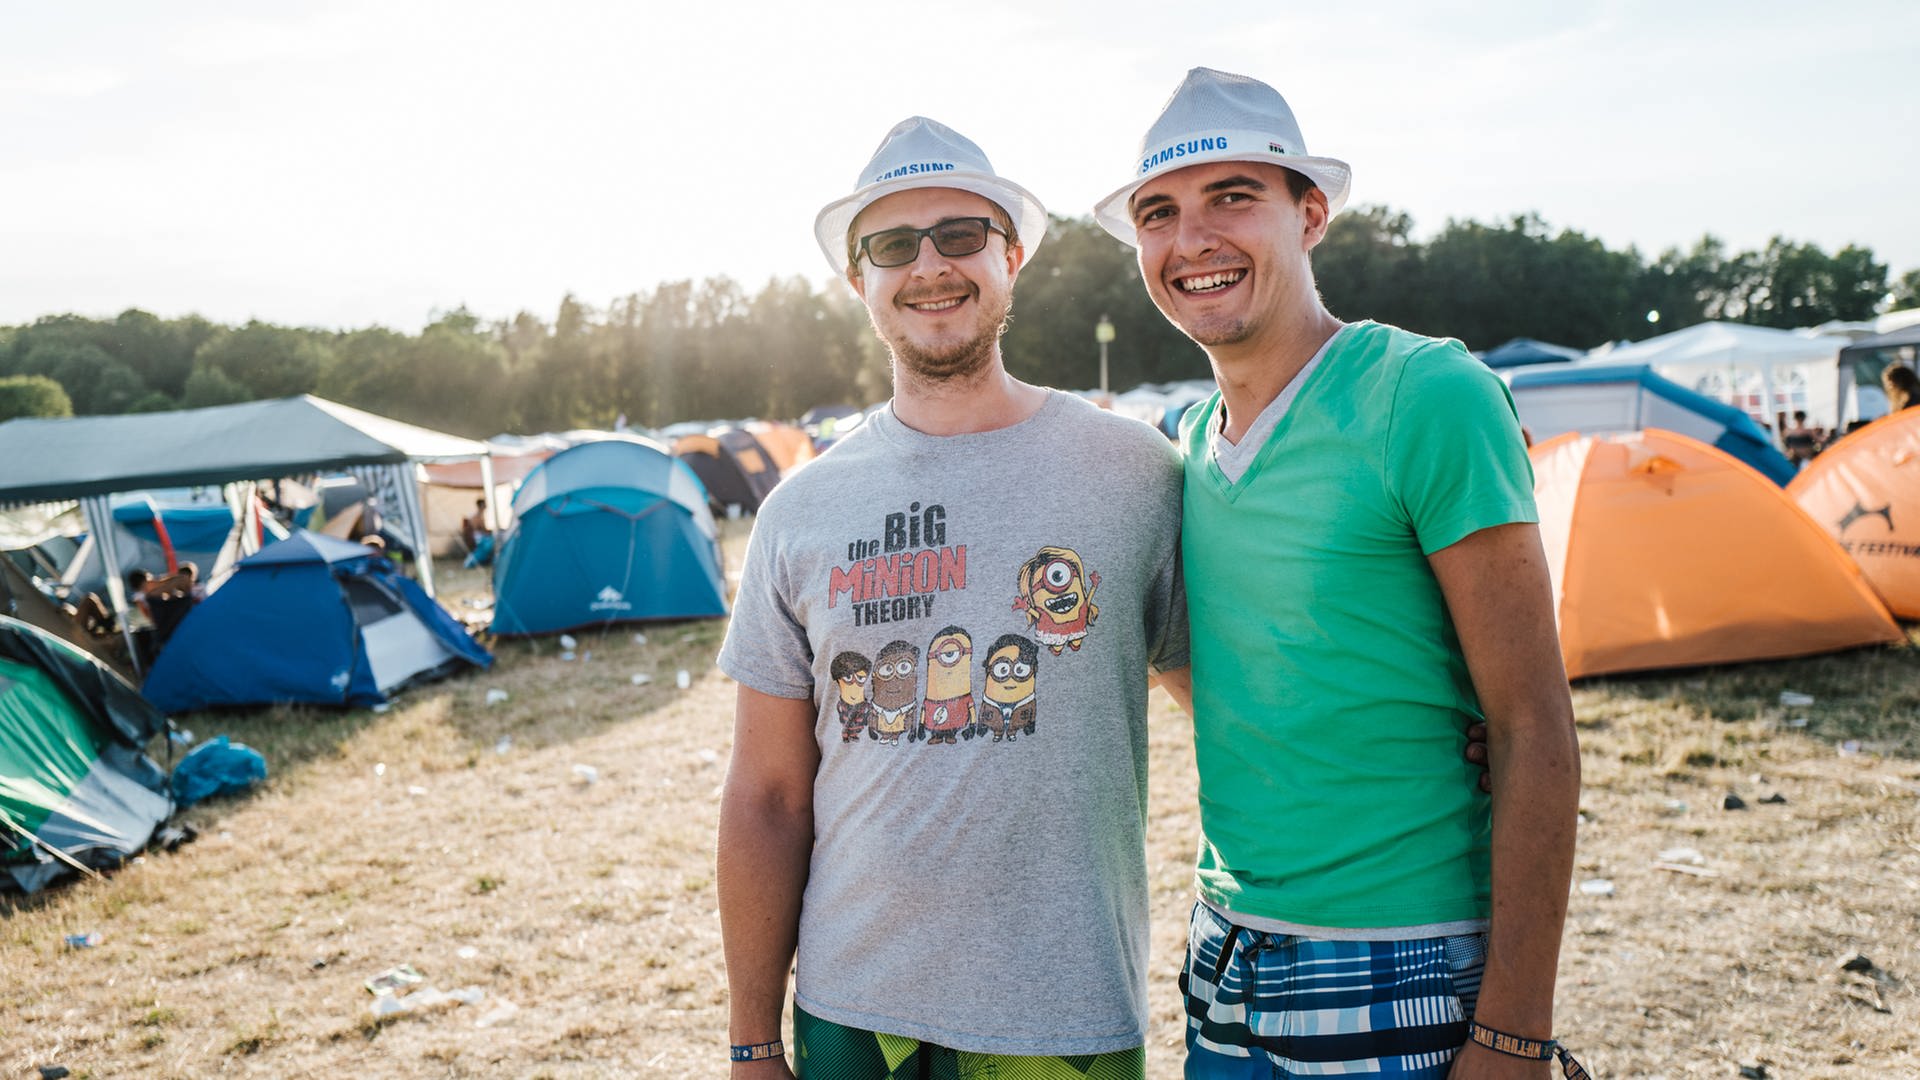 Campingplatz Party Nature One 2018 (Foto: SWR DASDING, Ronny Zimmermann)